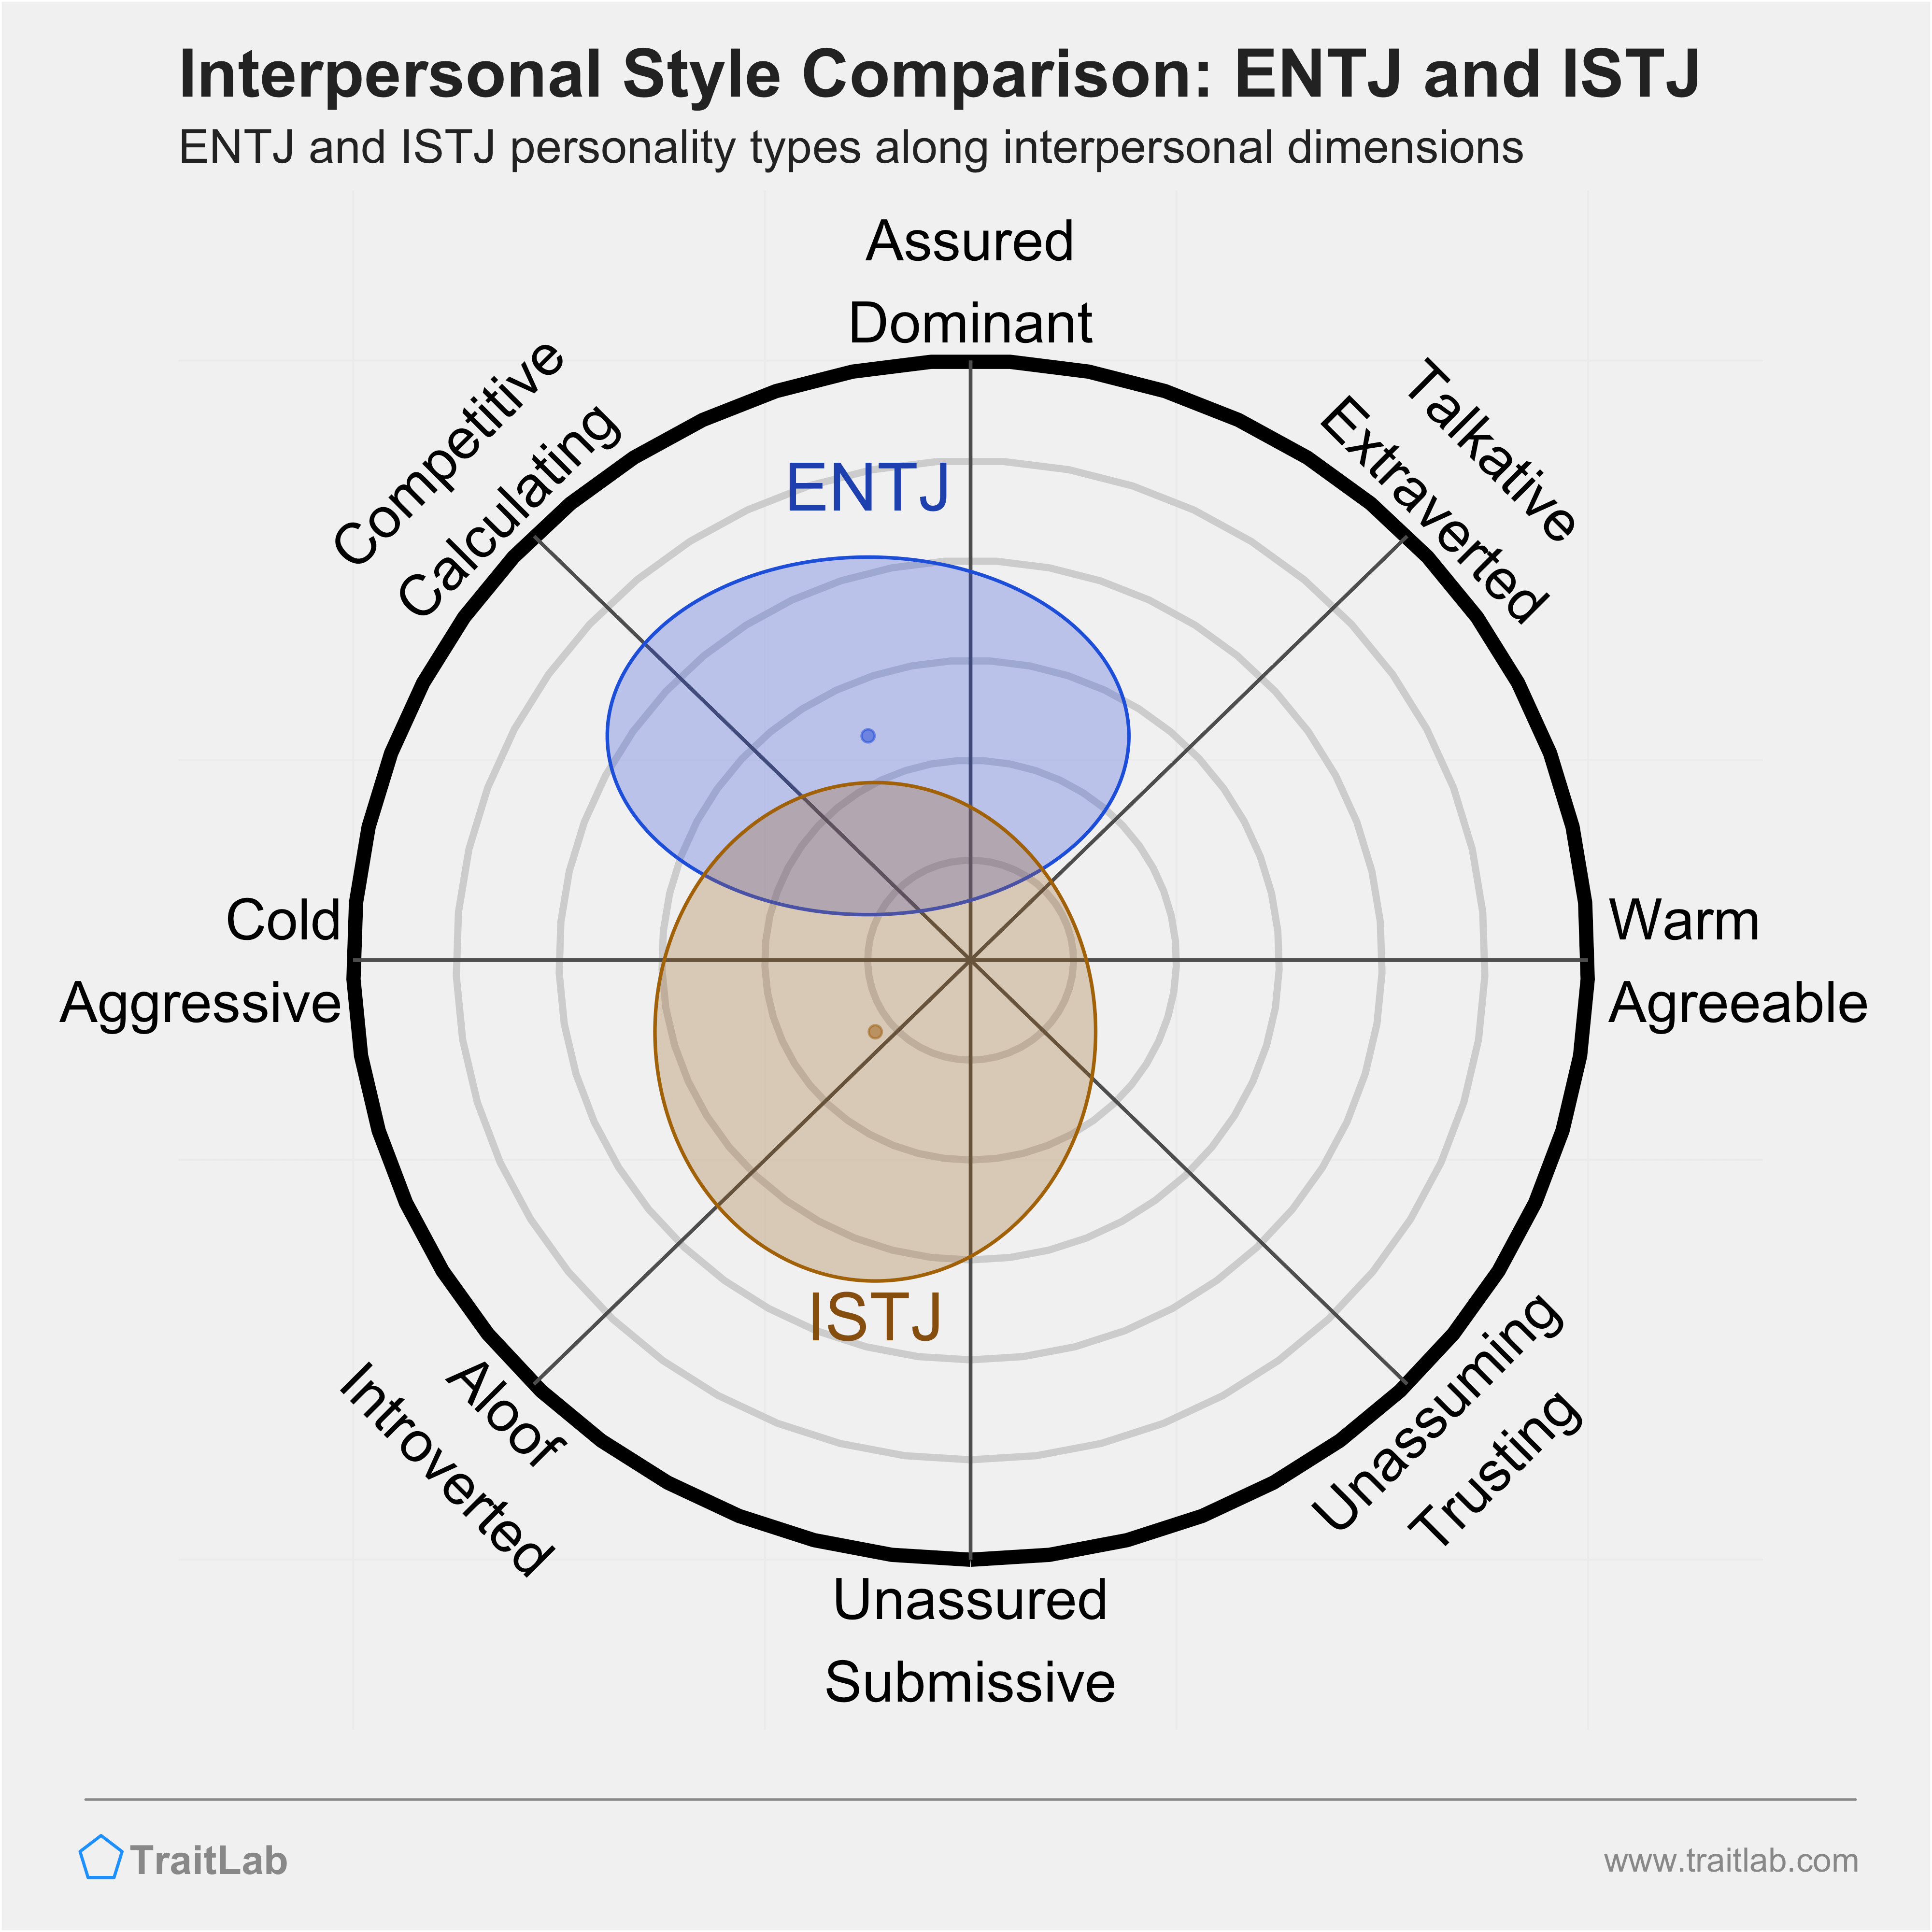 ENTJ and ISTJ comparison across interpersonal dimensions